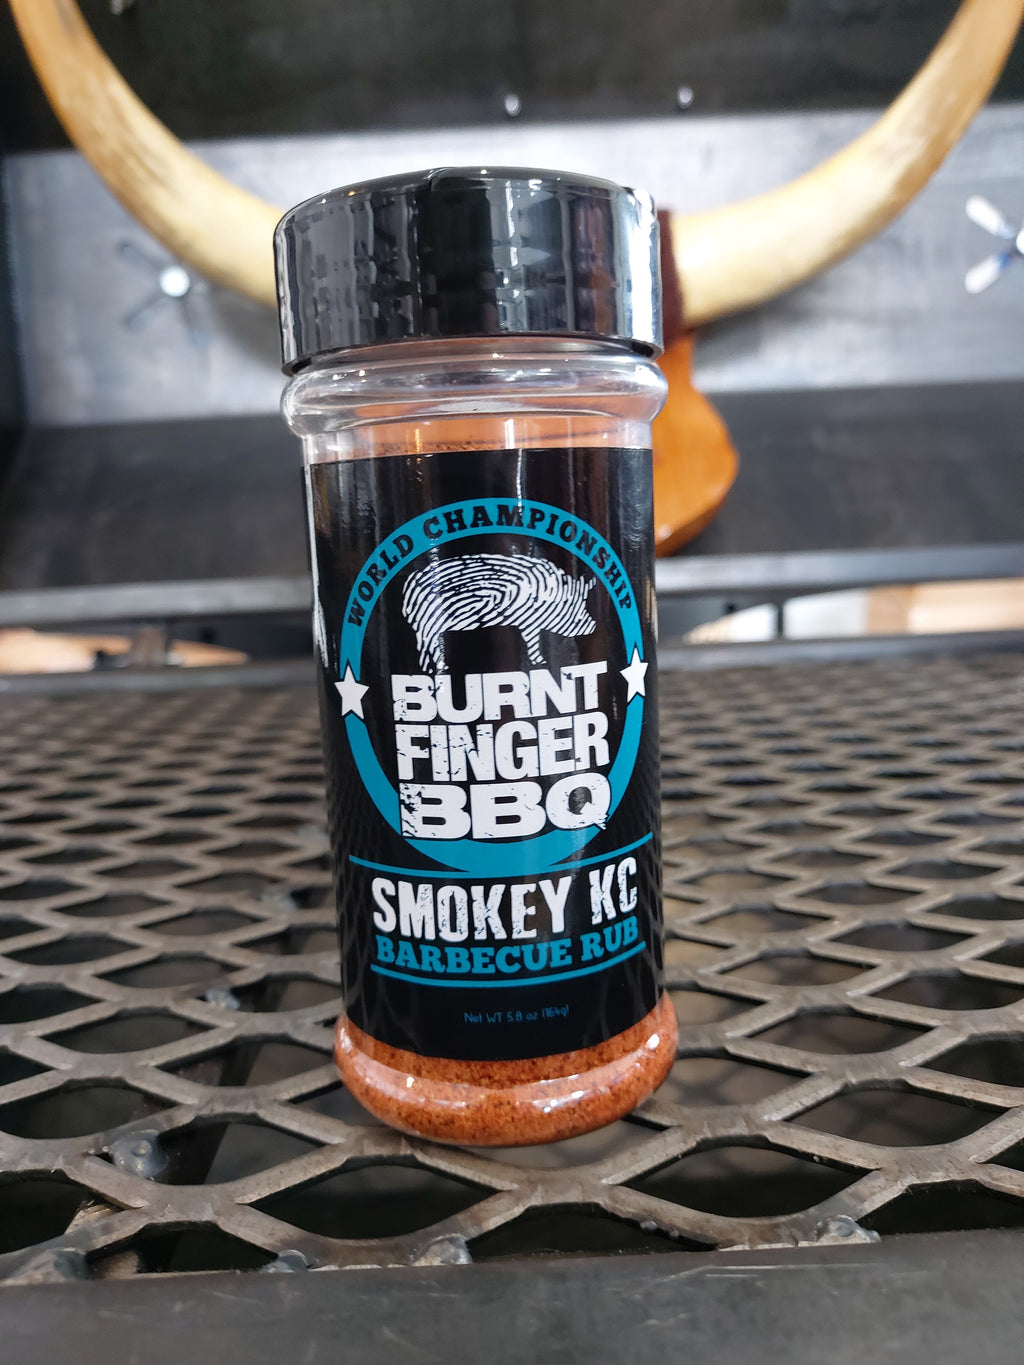 Smokey KC Barbecue Rub 164g by Burnt Finger BBQ